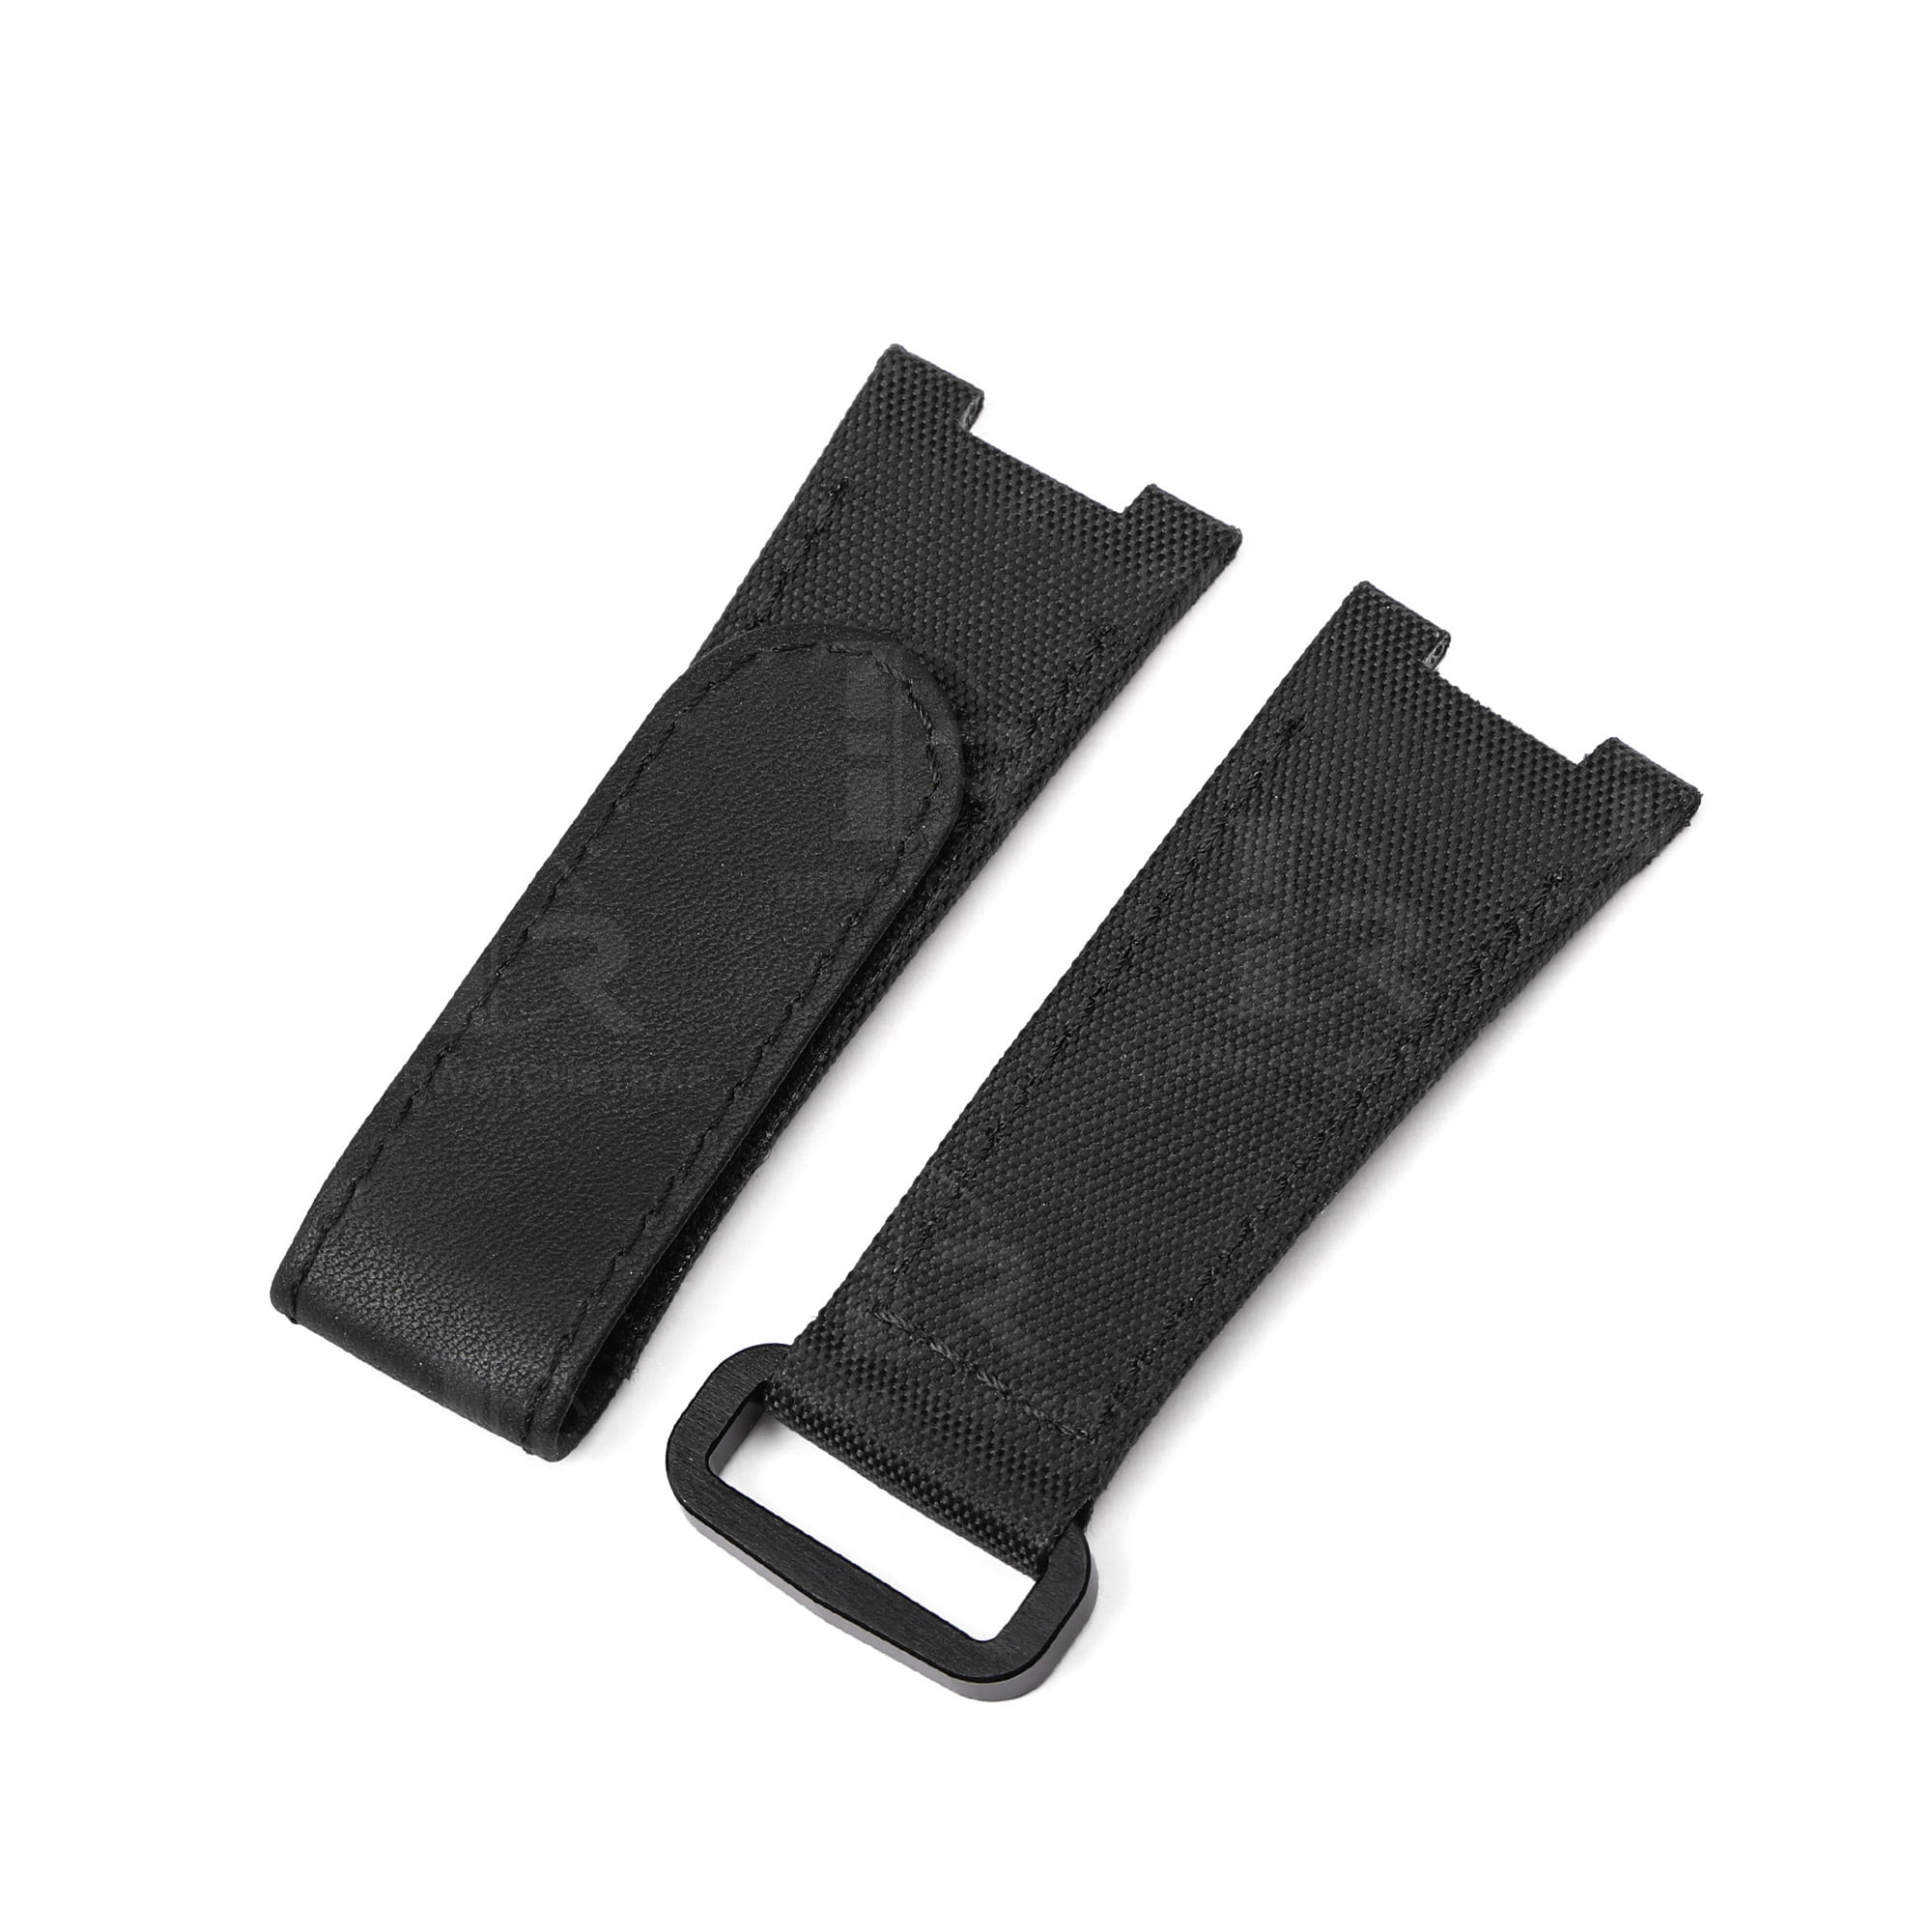 Buy Custom patek philippe nautilus 5711 Black Velcro strap Nylon for 5712 7010 Replacement for watchbands (1)